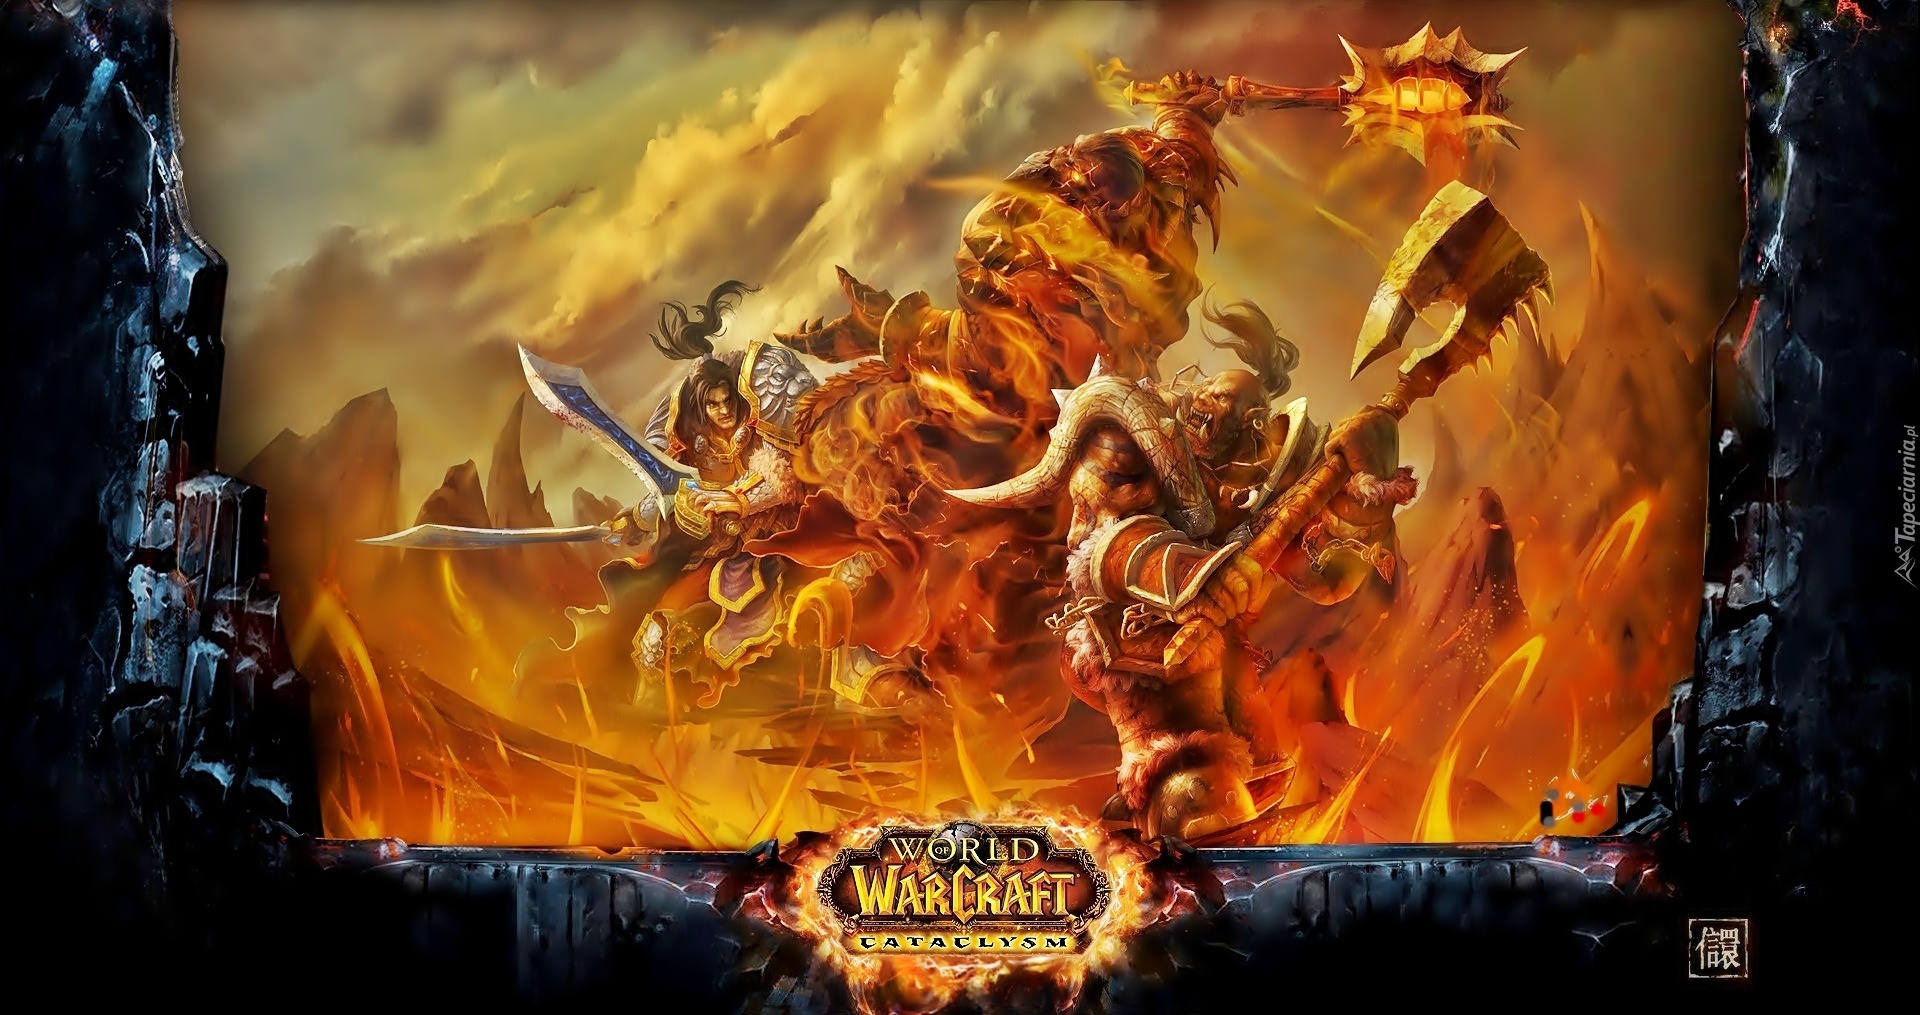 Катаклизм события. World of Warcraft Cataclysm. World of Warcraft Cataclysm 4.3.4. World of Warcraft катаклизм. Ворлд оф варкрафт катаклизм.